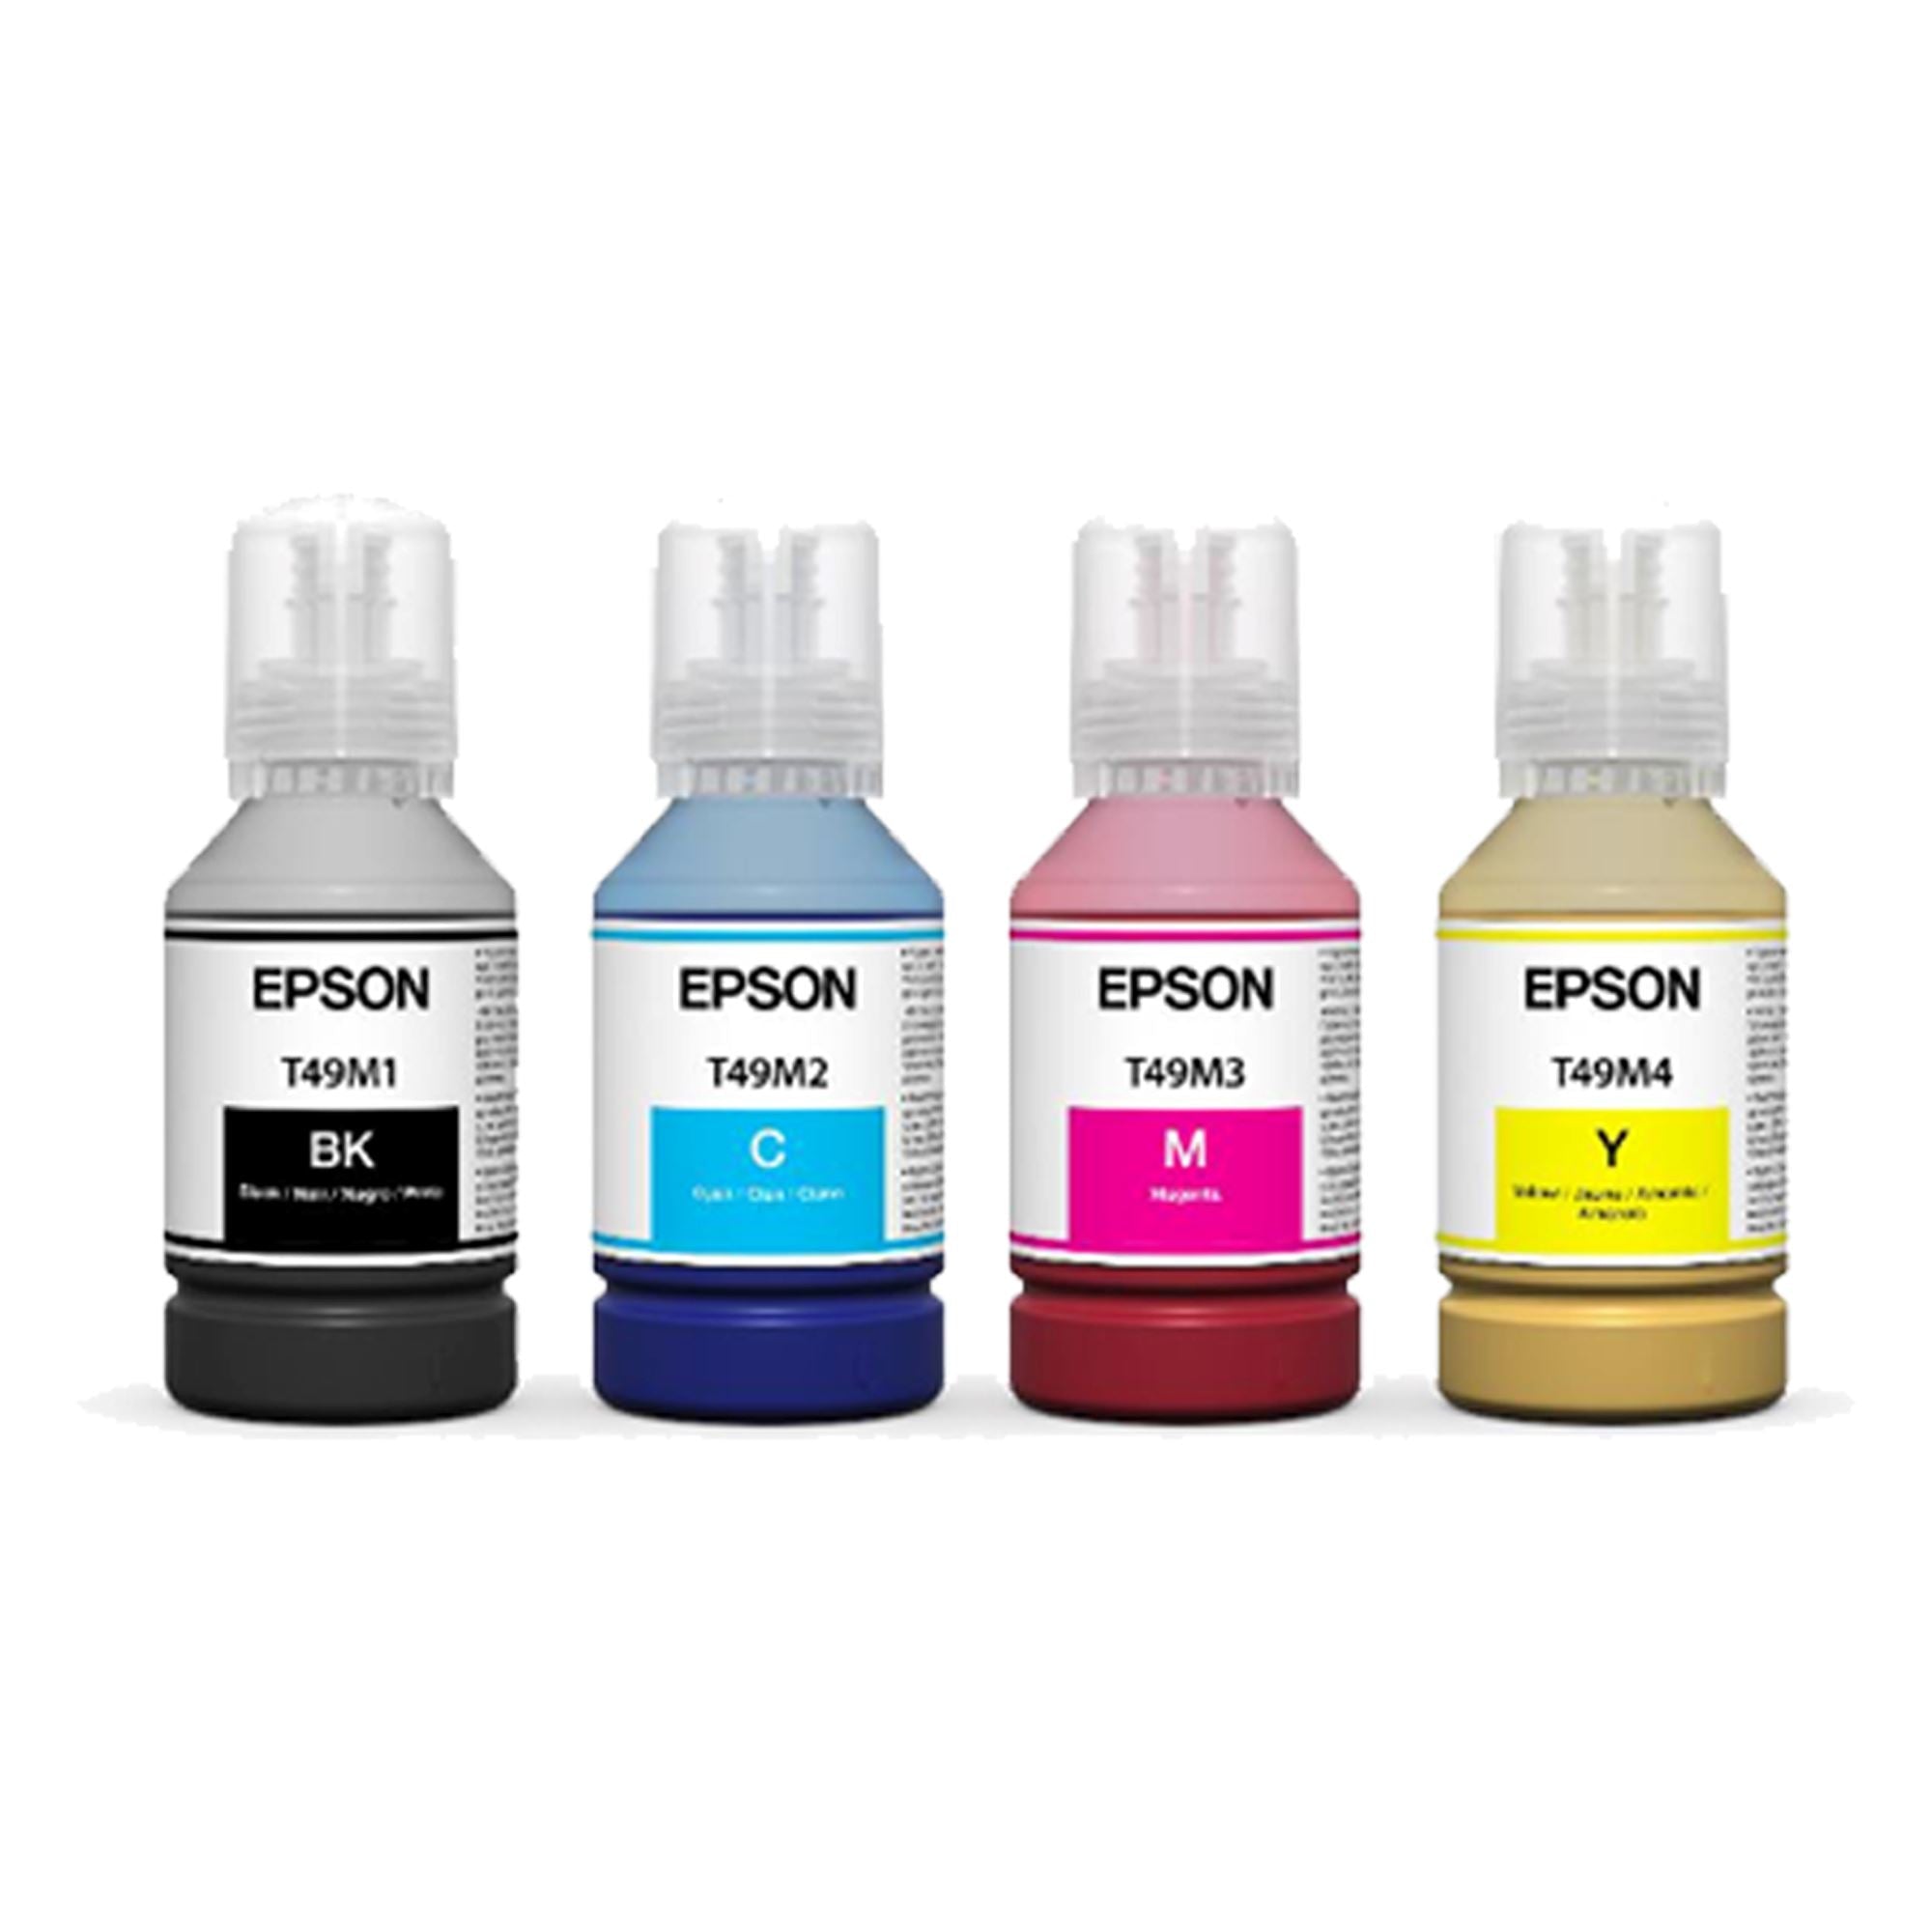 Sublimation Ink for Epson desktop printers wholesale - SUPERINKS